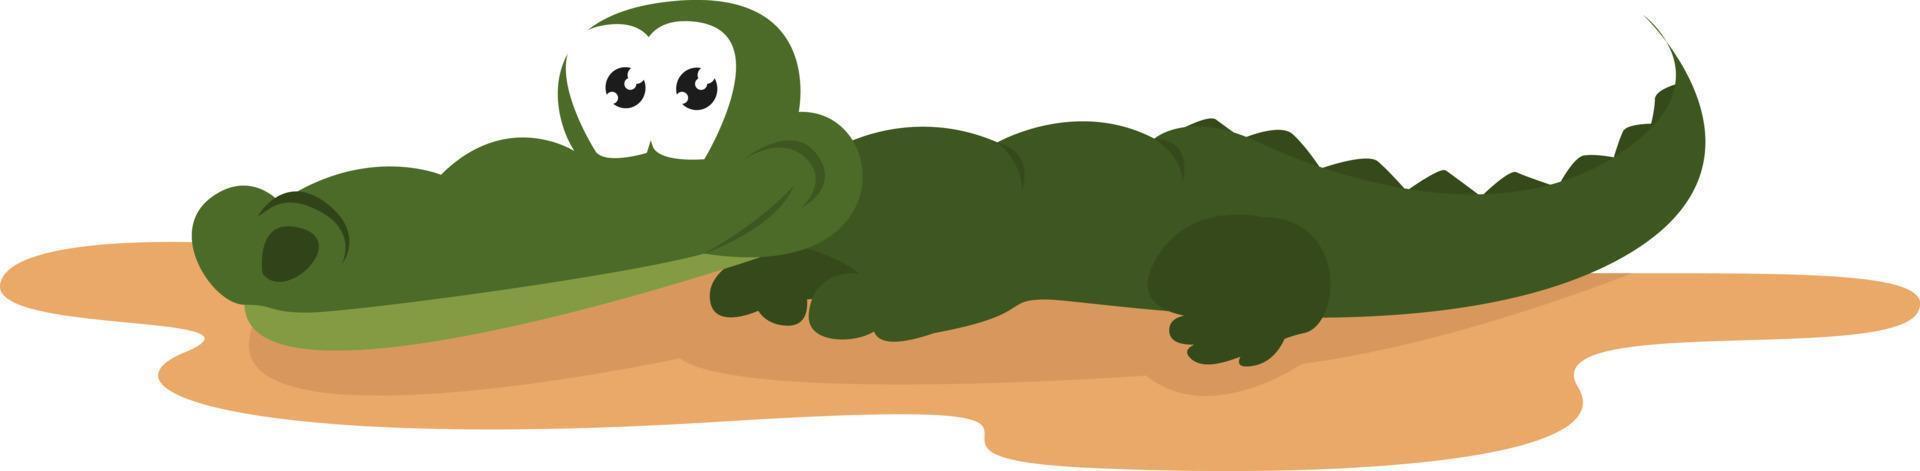 Happy baby crocodile,illustration,vector on white background vector